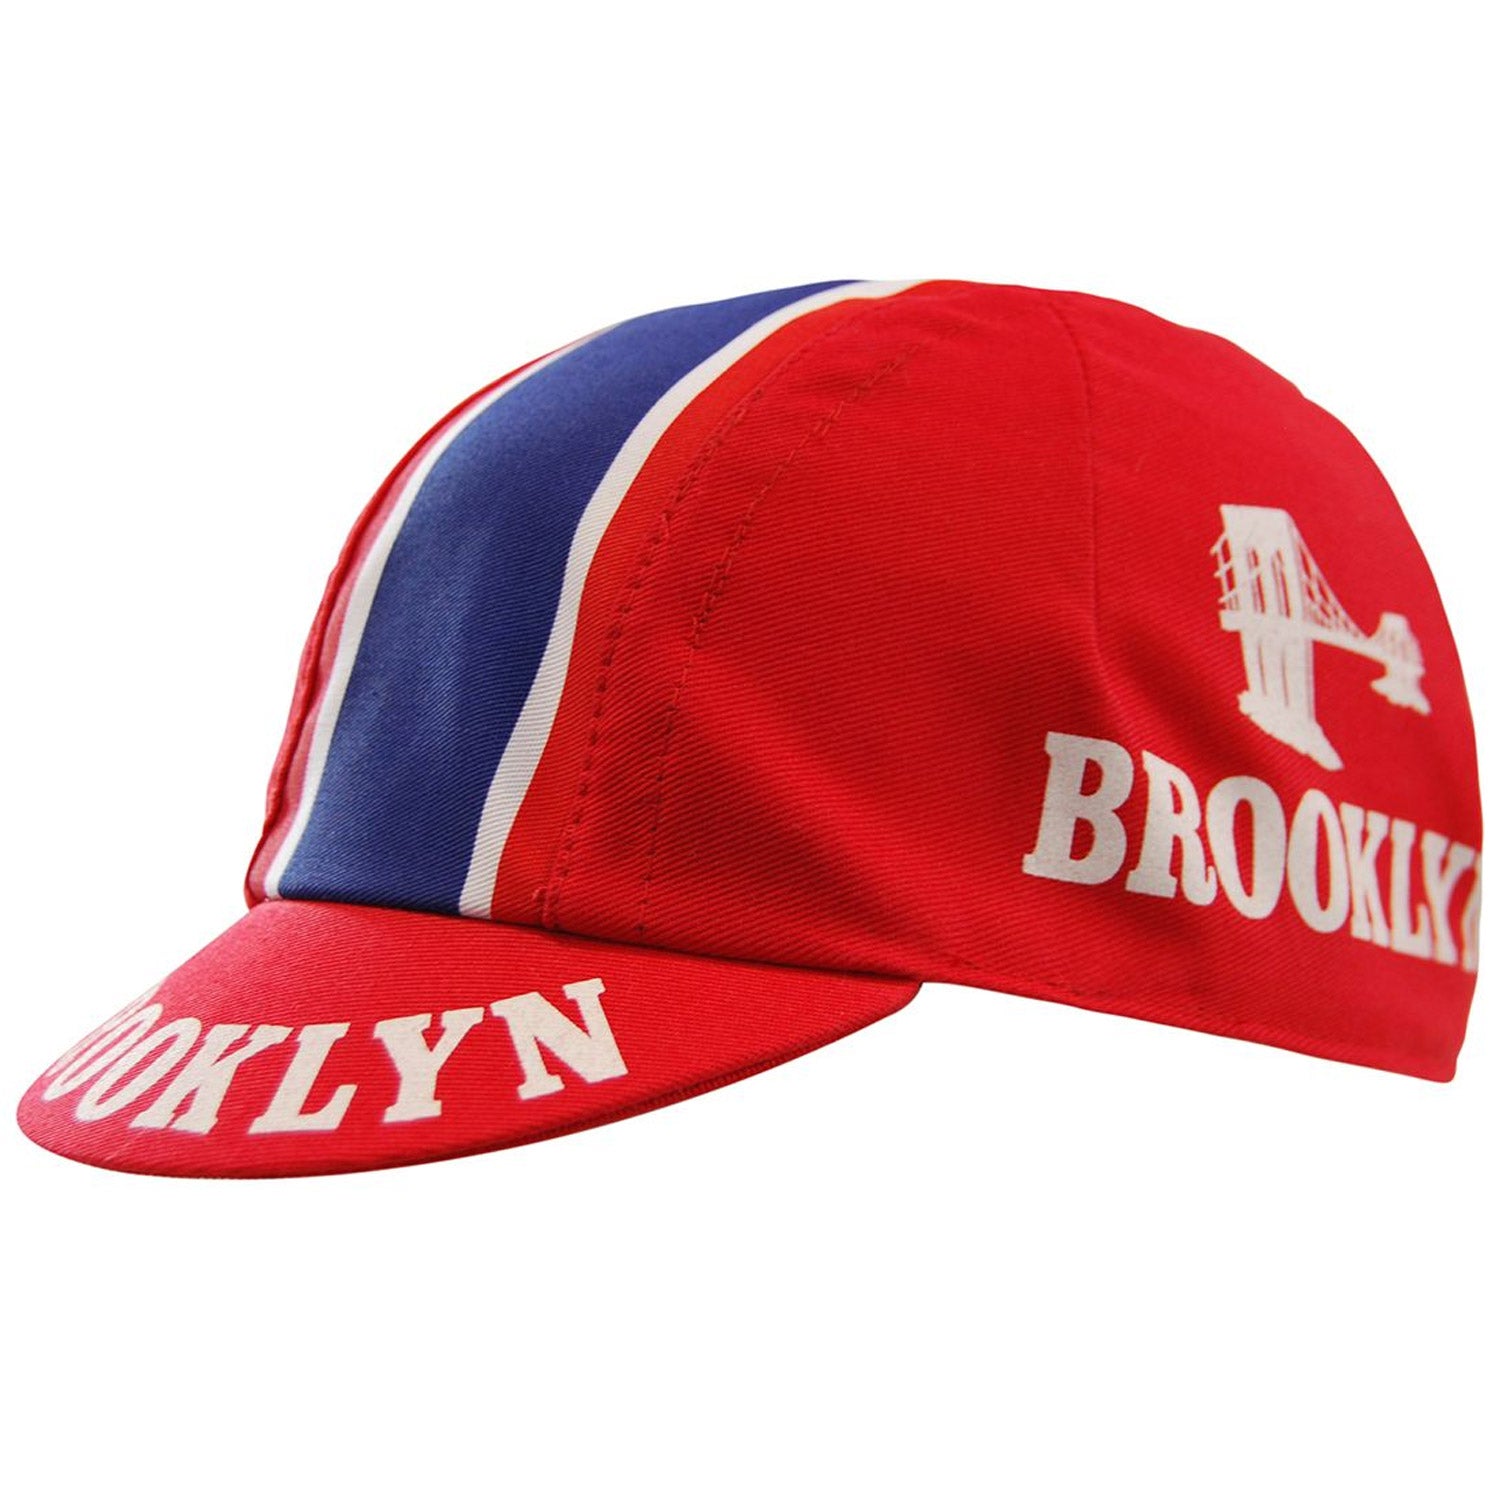 Cappellino Headdy Brooklyn - Rosso